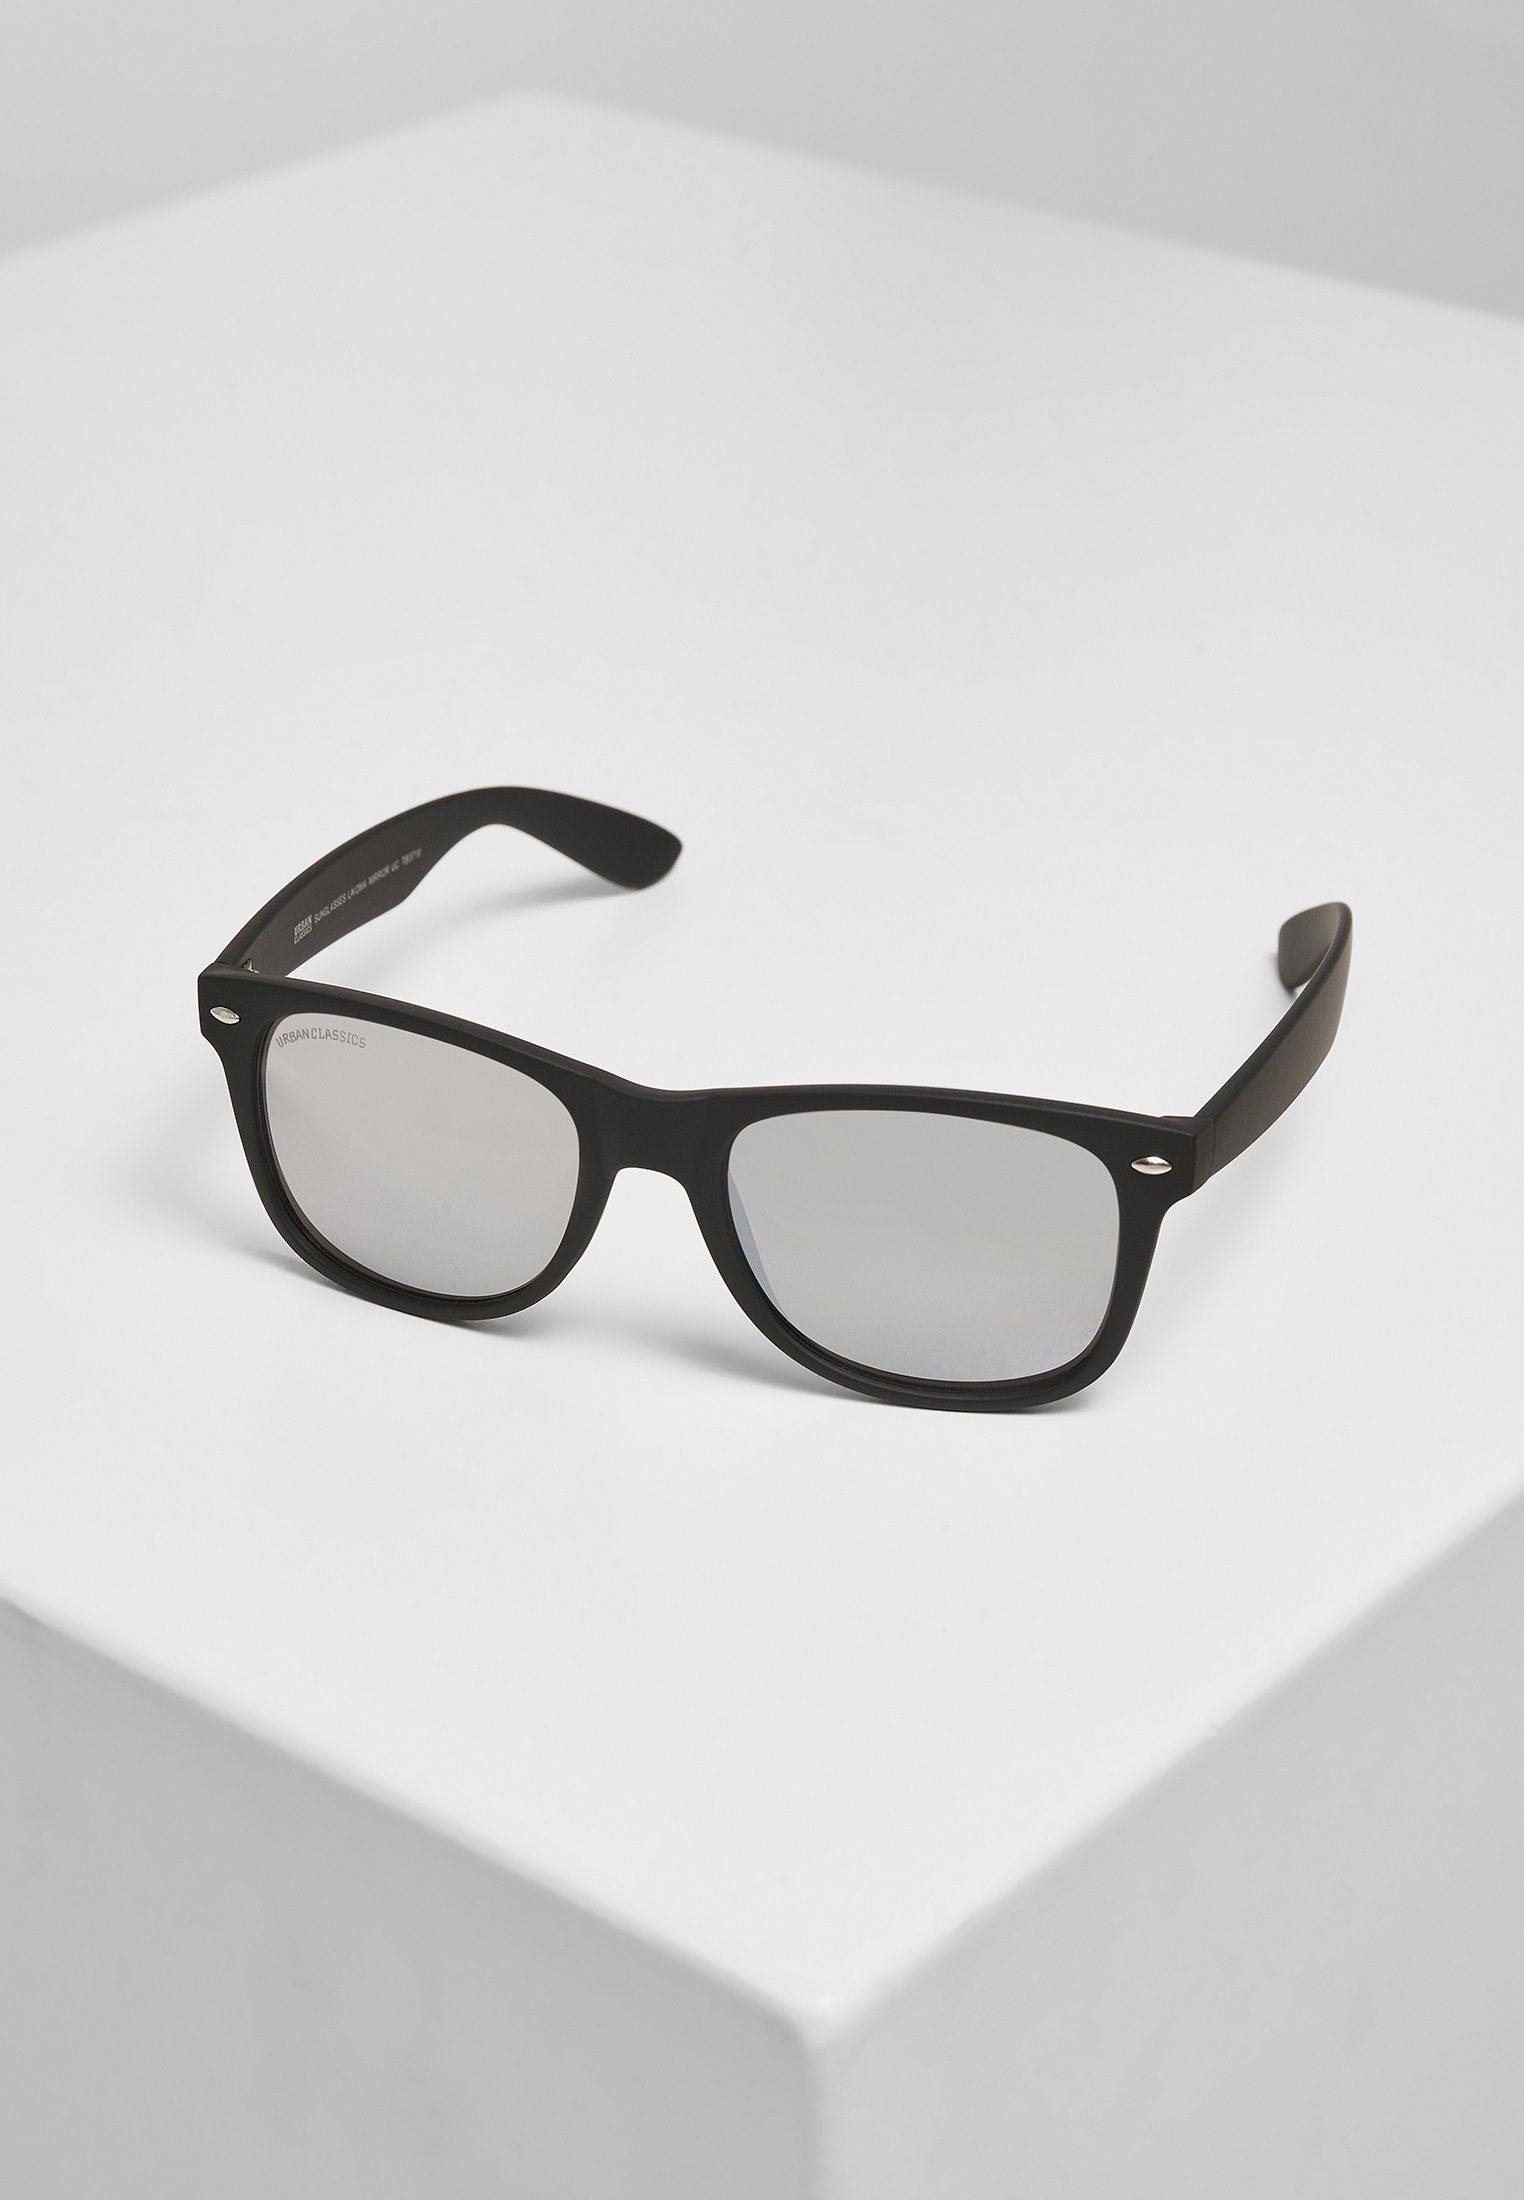 UC Sonnenbrille Accessoires Likoma black/silver CLASSICS Sunglasses URBAN Mirror